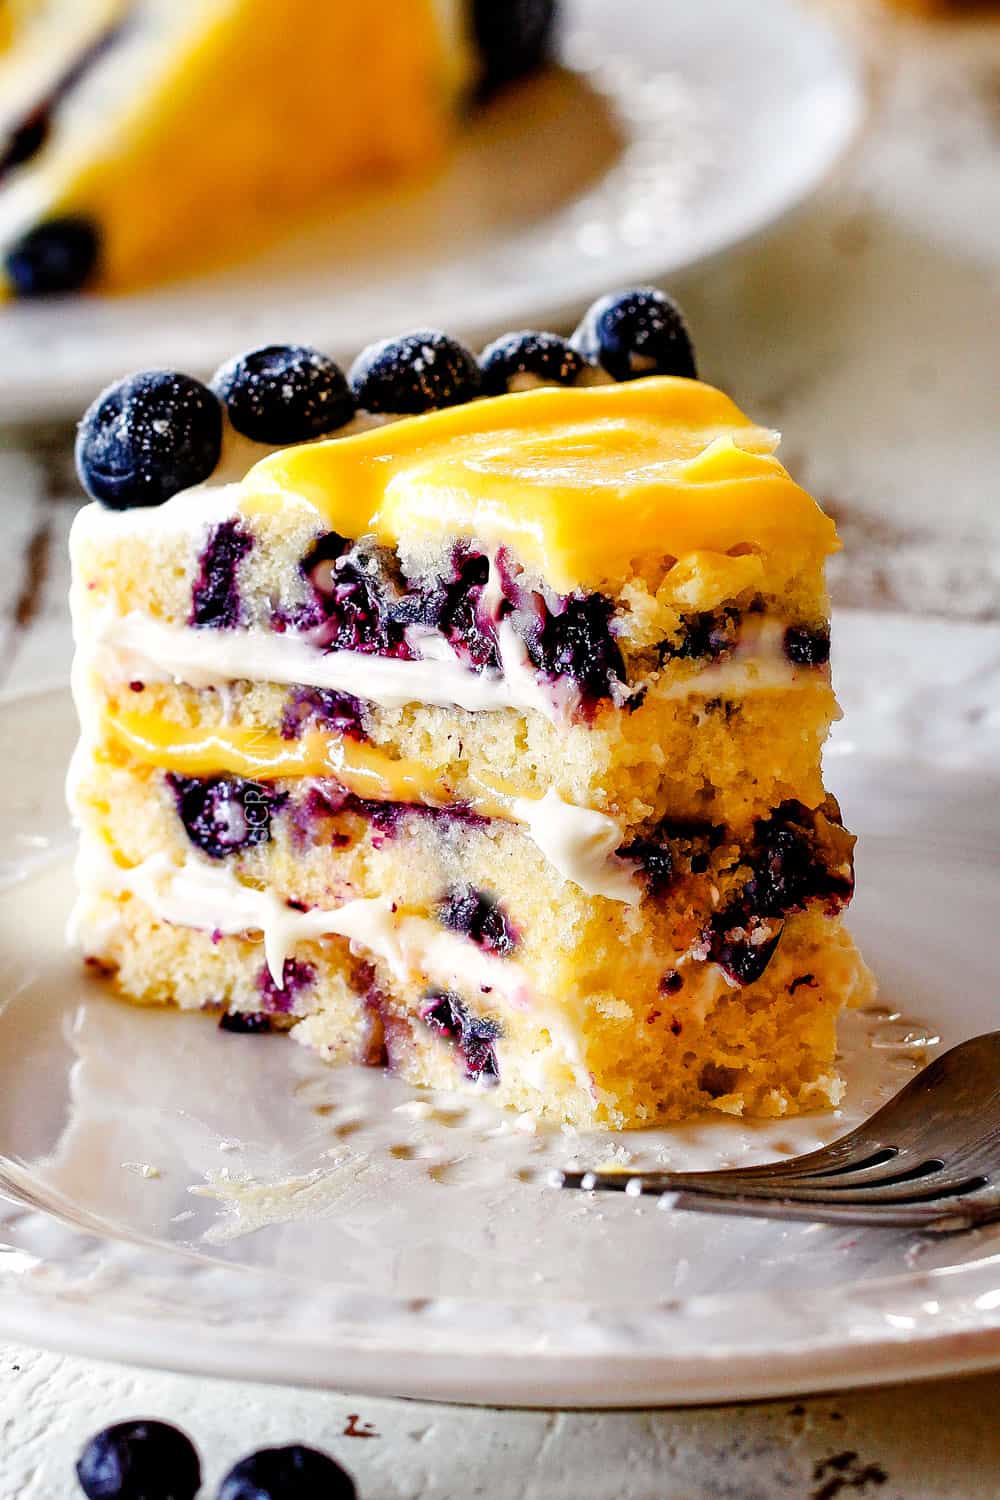 lemon curd for cake in between layers of blueberry lemon cake